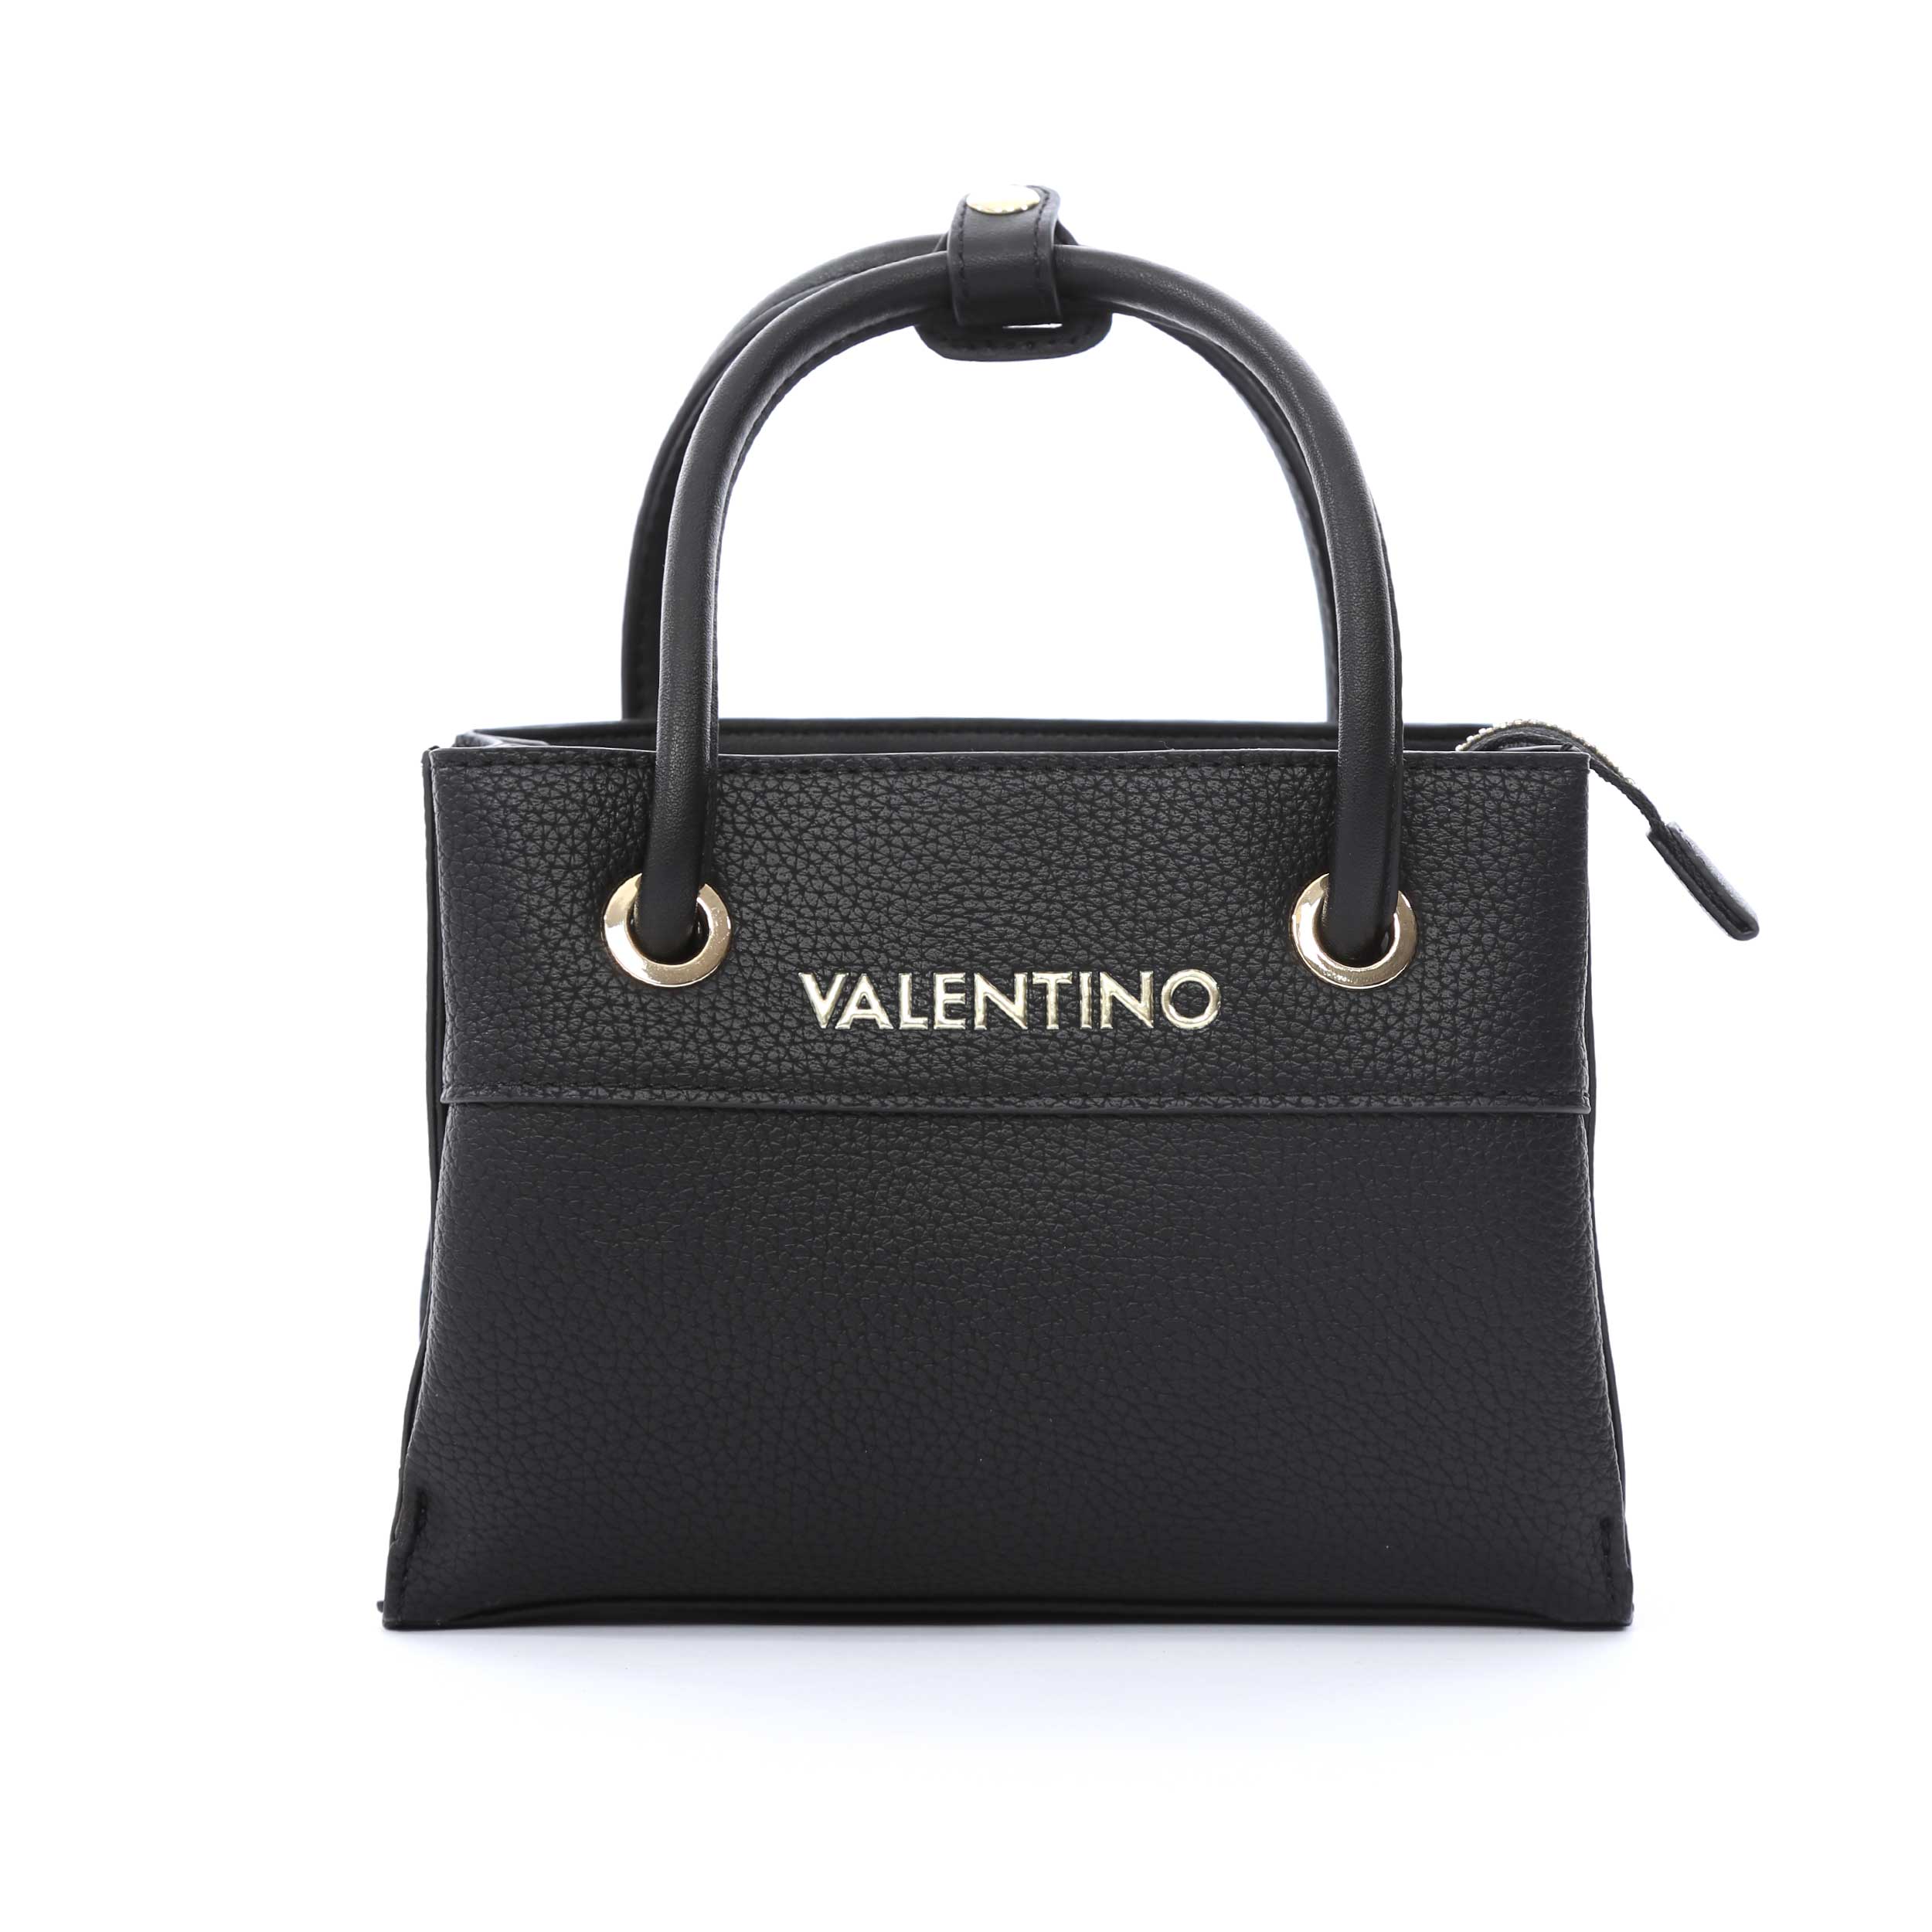 VALENTINO Alexia Large Satchel Bag Black